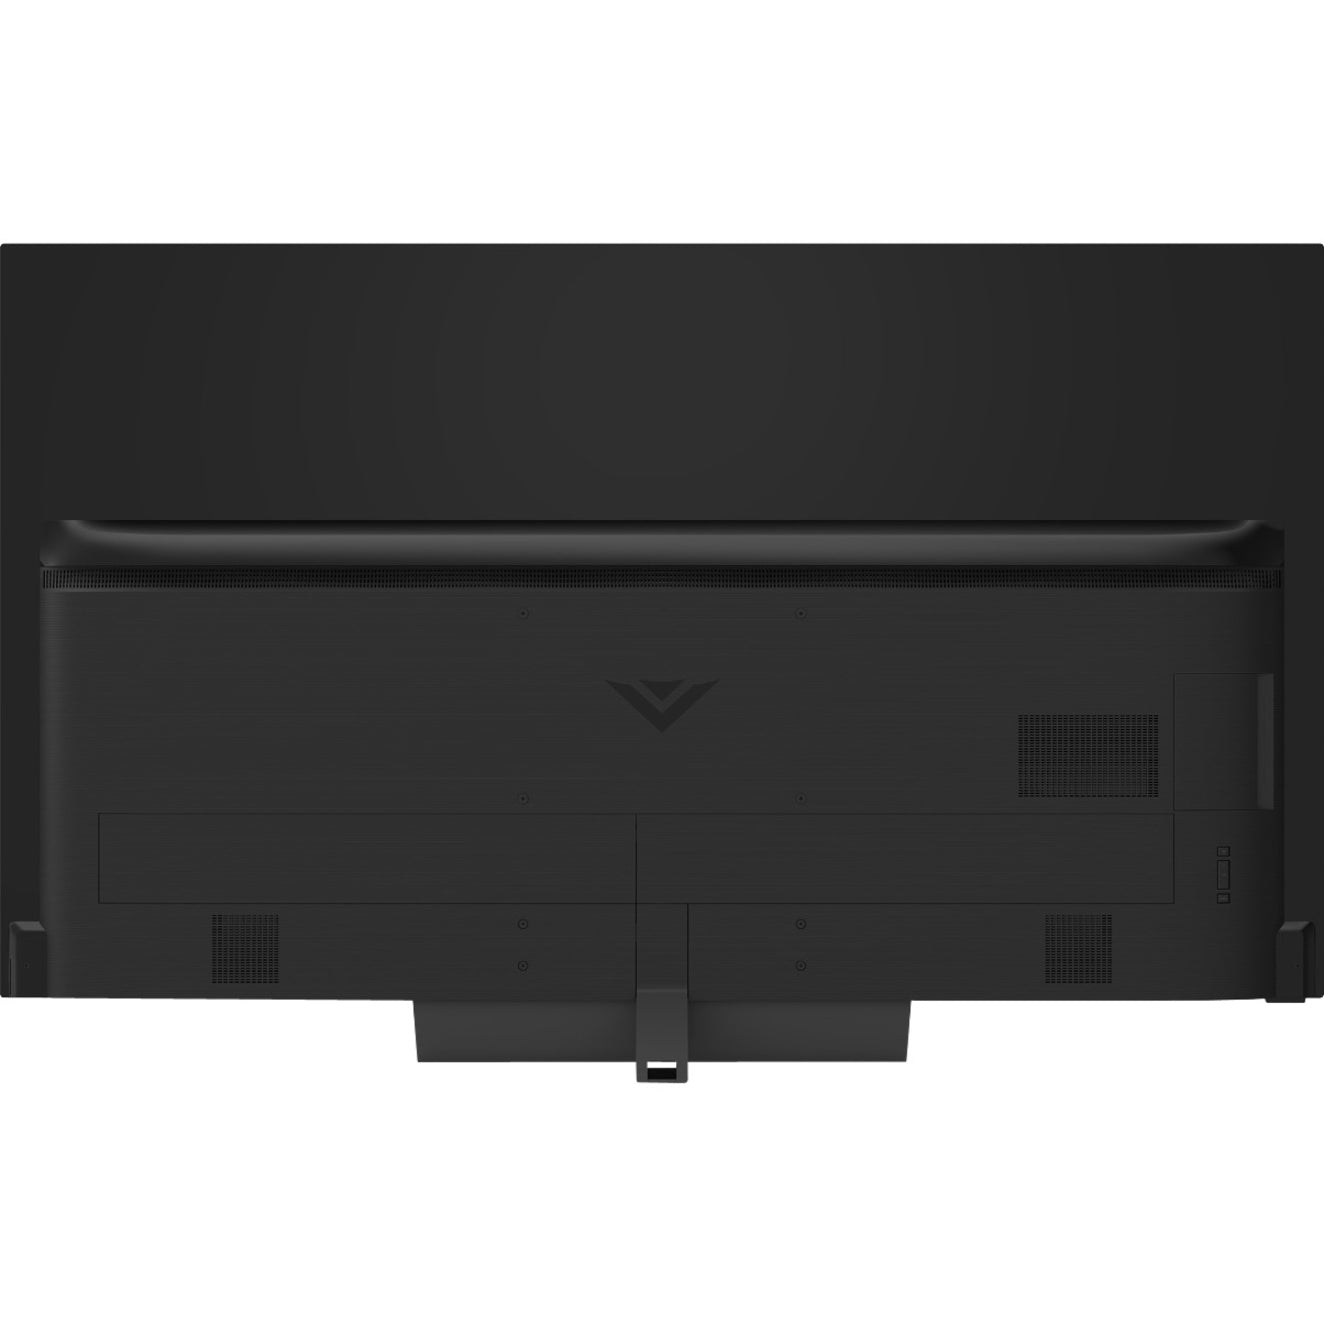 VIZIO OLED55-H1 OLED 55" Class 4K HDR SmartCast Smart TV, 120Hz, Dolby Vision, Game Mode